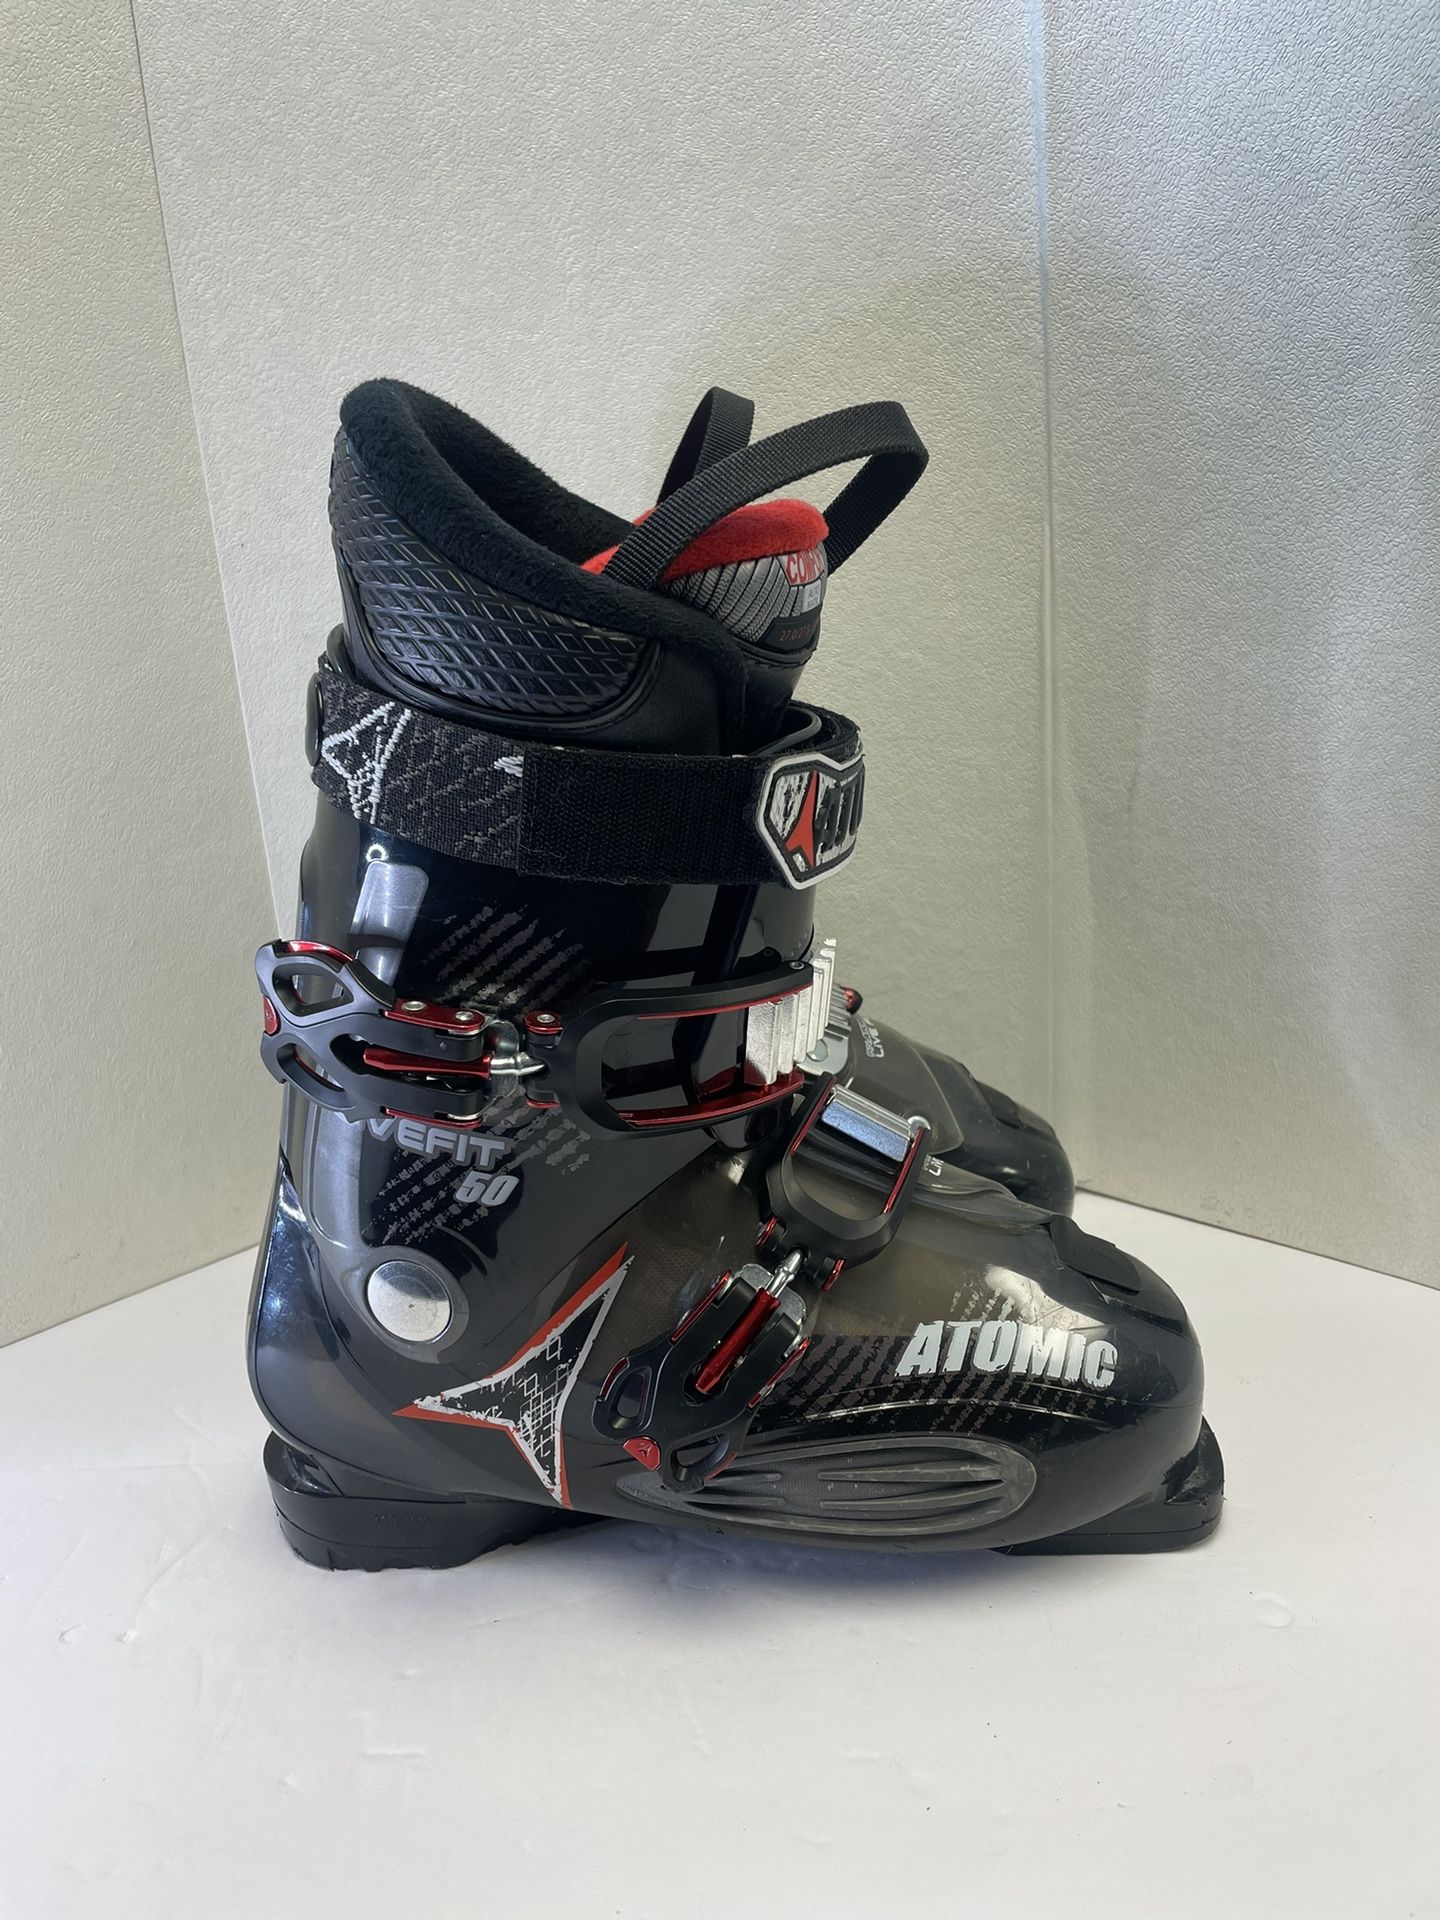 ATOMIC LIVEFIT 50 Alpine Downhill Ski Boots Size 27 / 27.5 319 Mm - Black Red